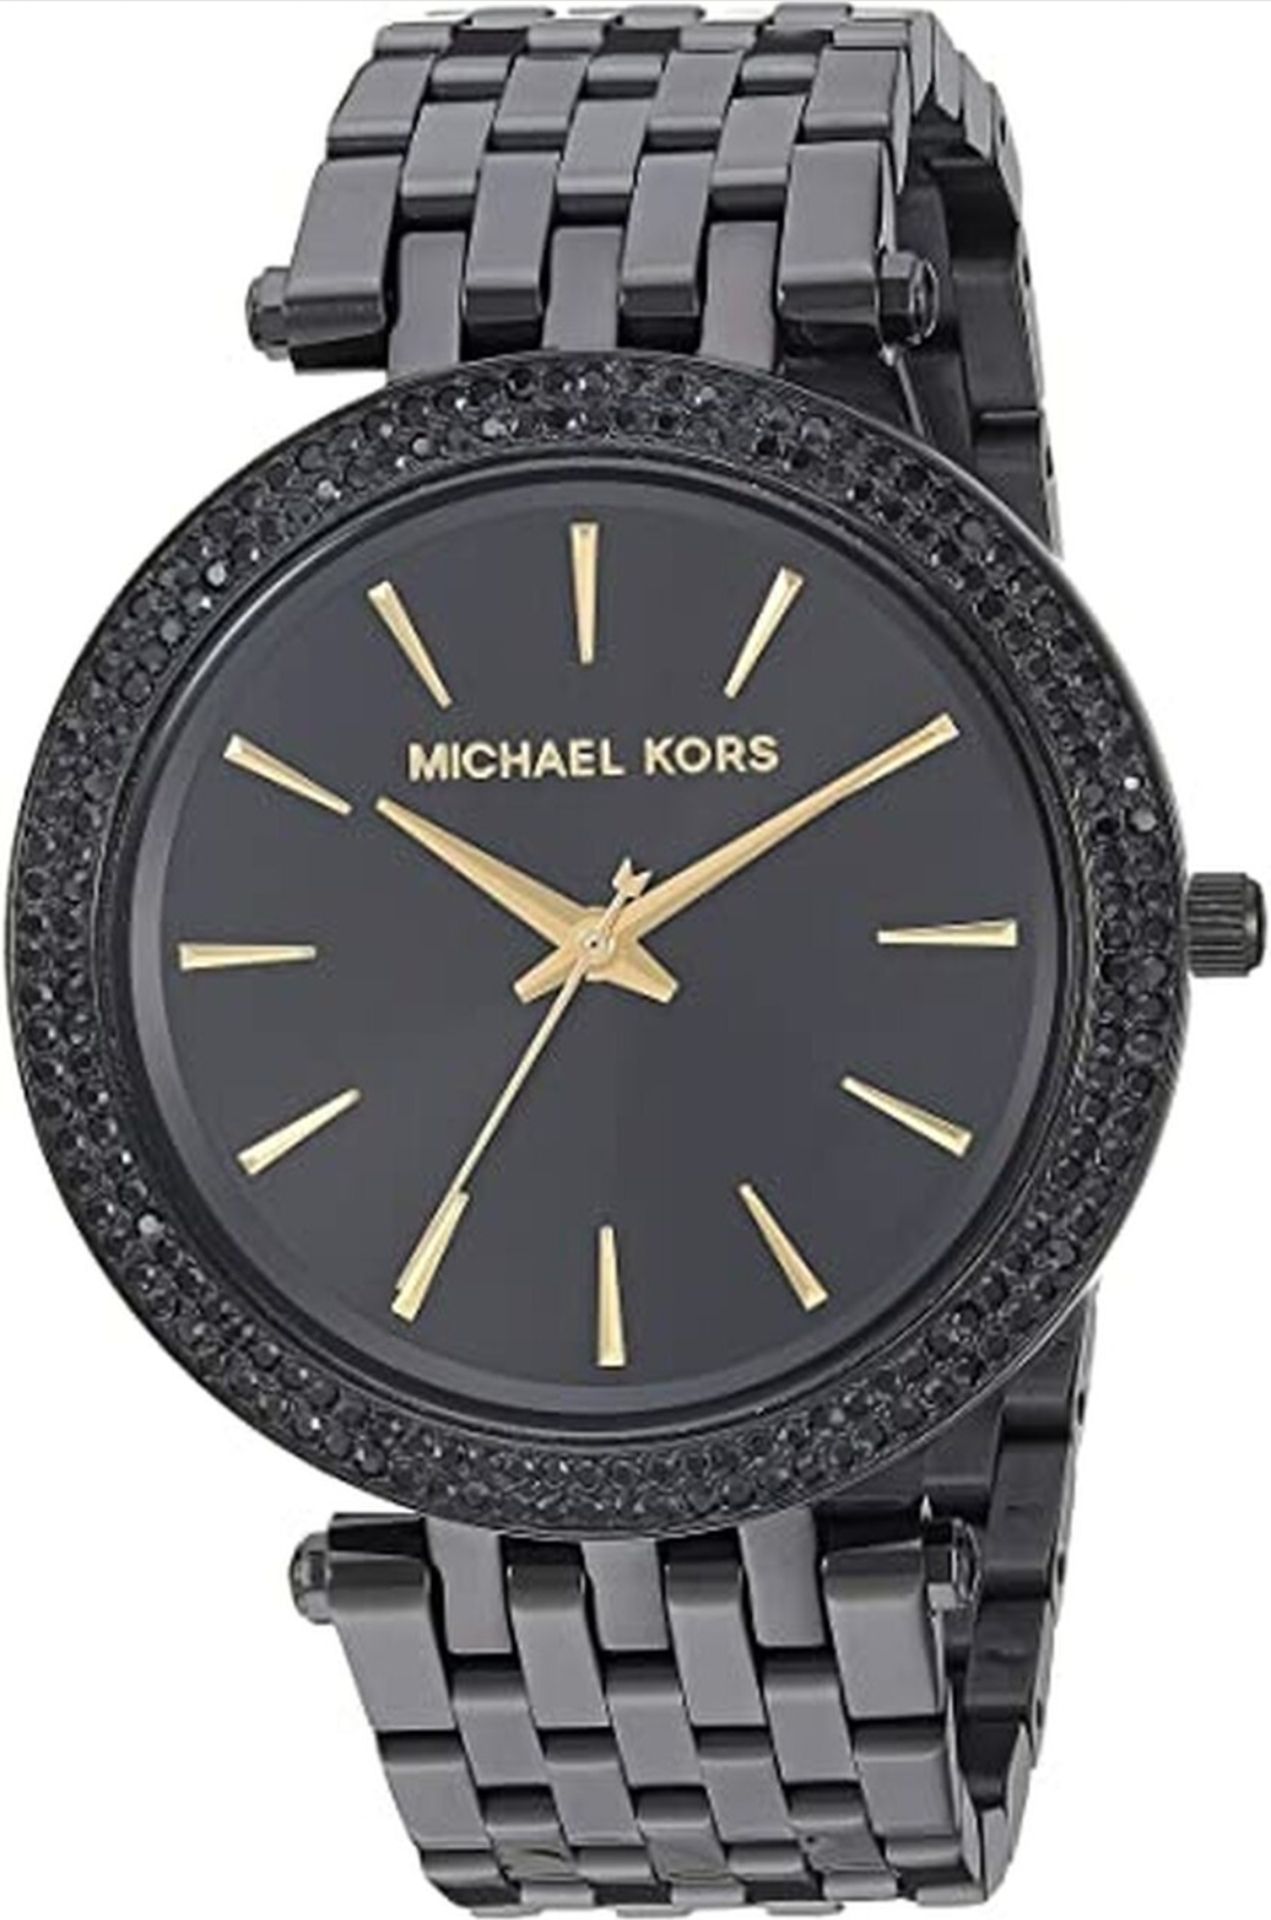 Michael Kors MK3337 Ladies Black Darci Quartz Watch - Image 2 of 7